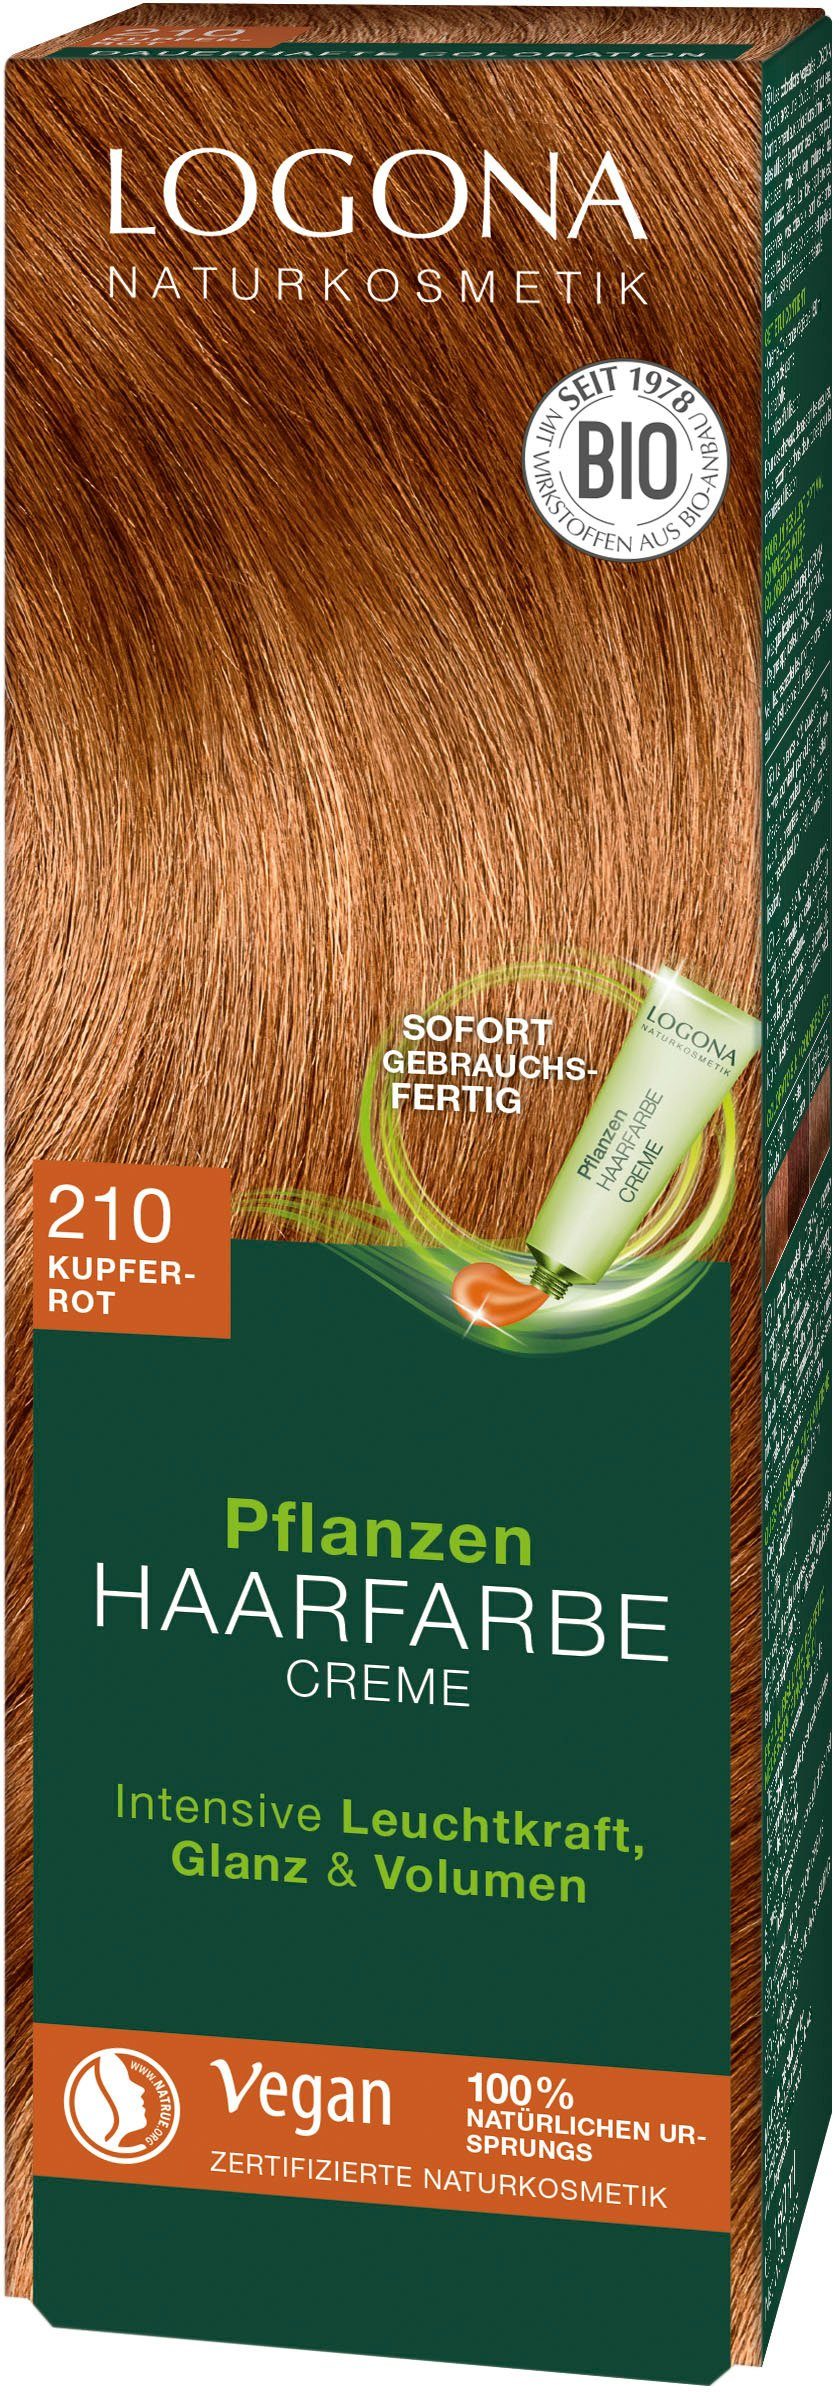 Haarfarbe Creme Pflanzen-Haarfarbe LOGONA Logona